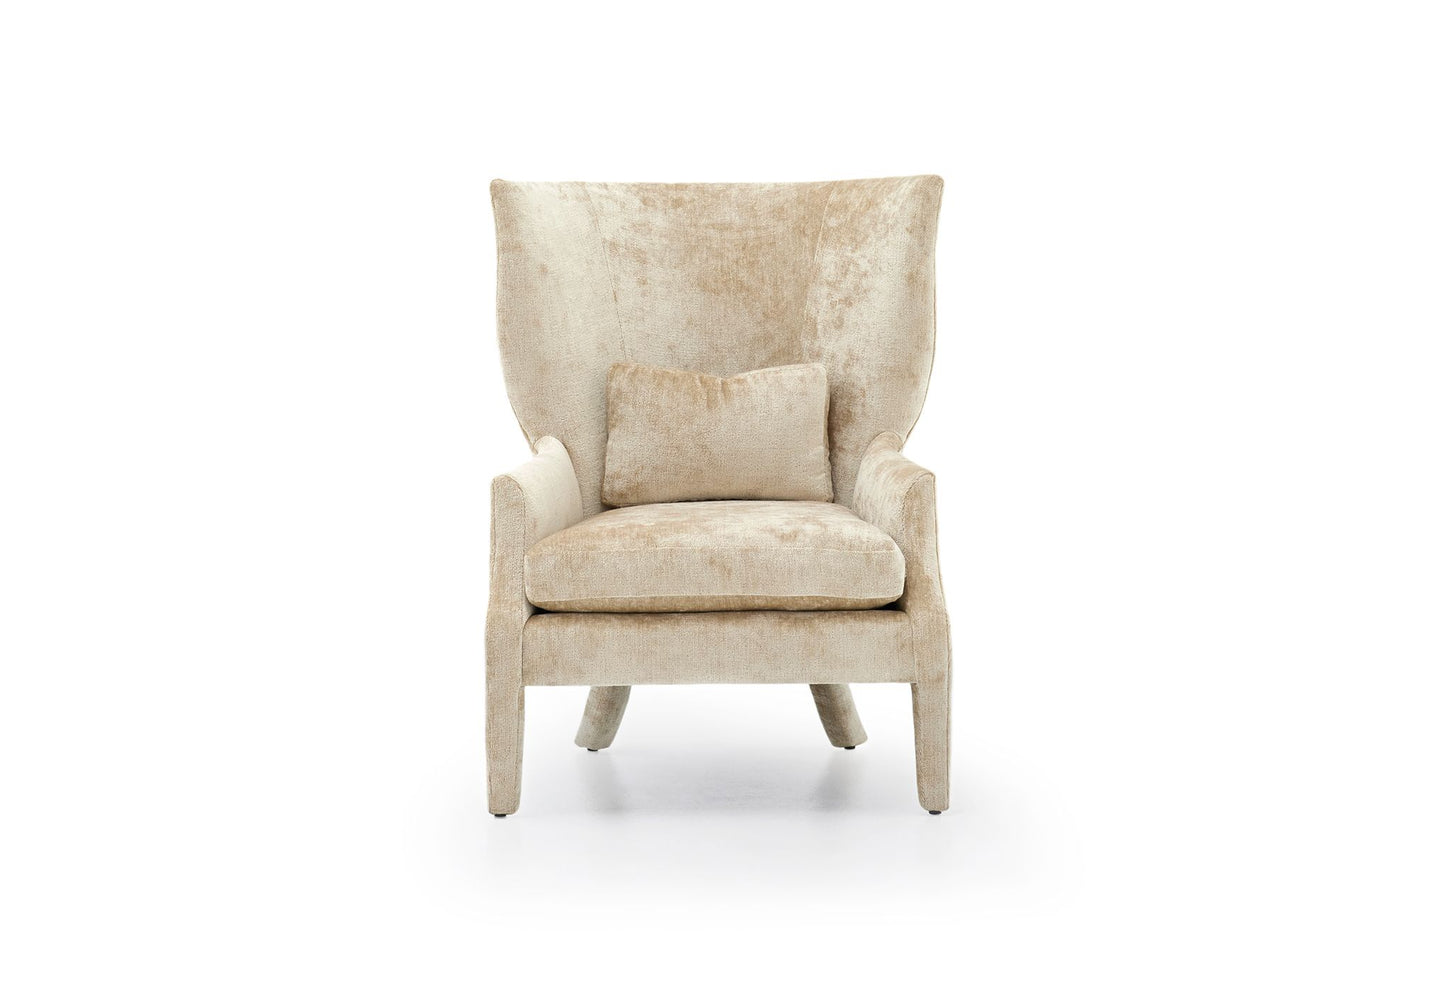 Celine Wing Chair - Hot Spot Granite